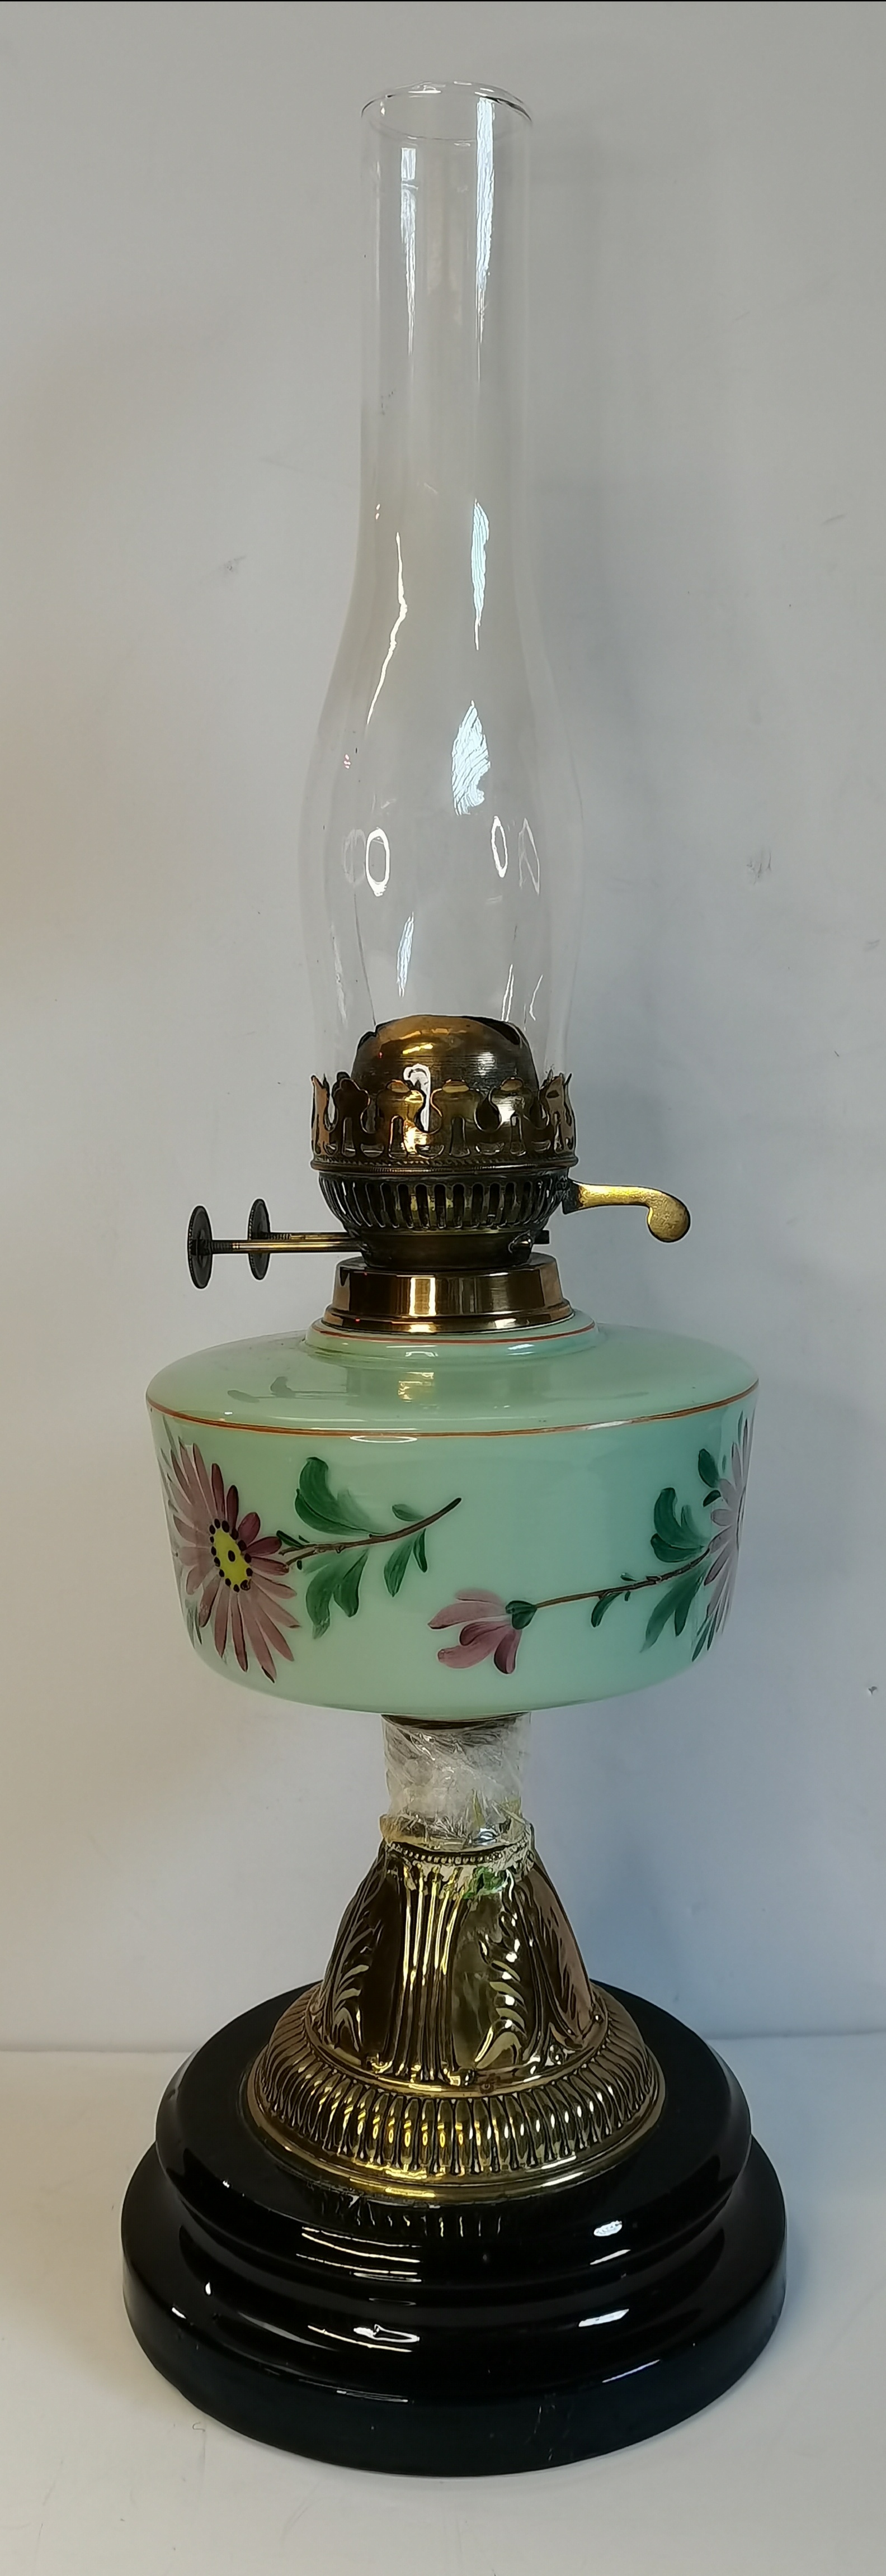 A Victorian glass oil lamp